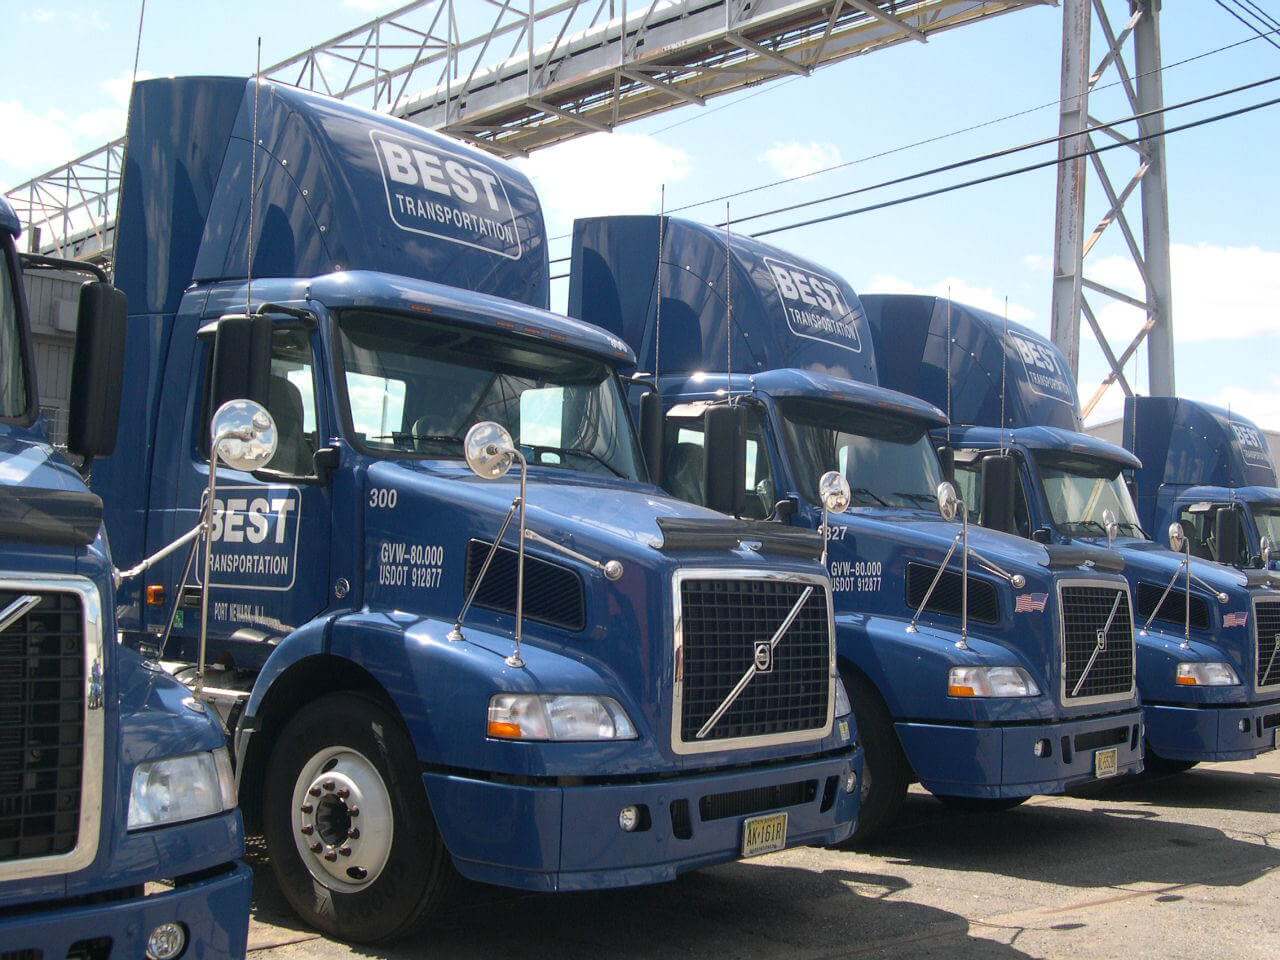 voyager trucking corporation newark photos